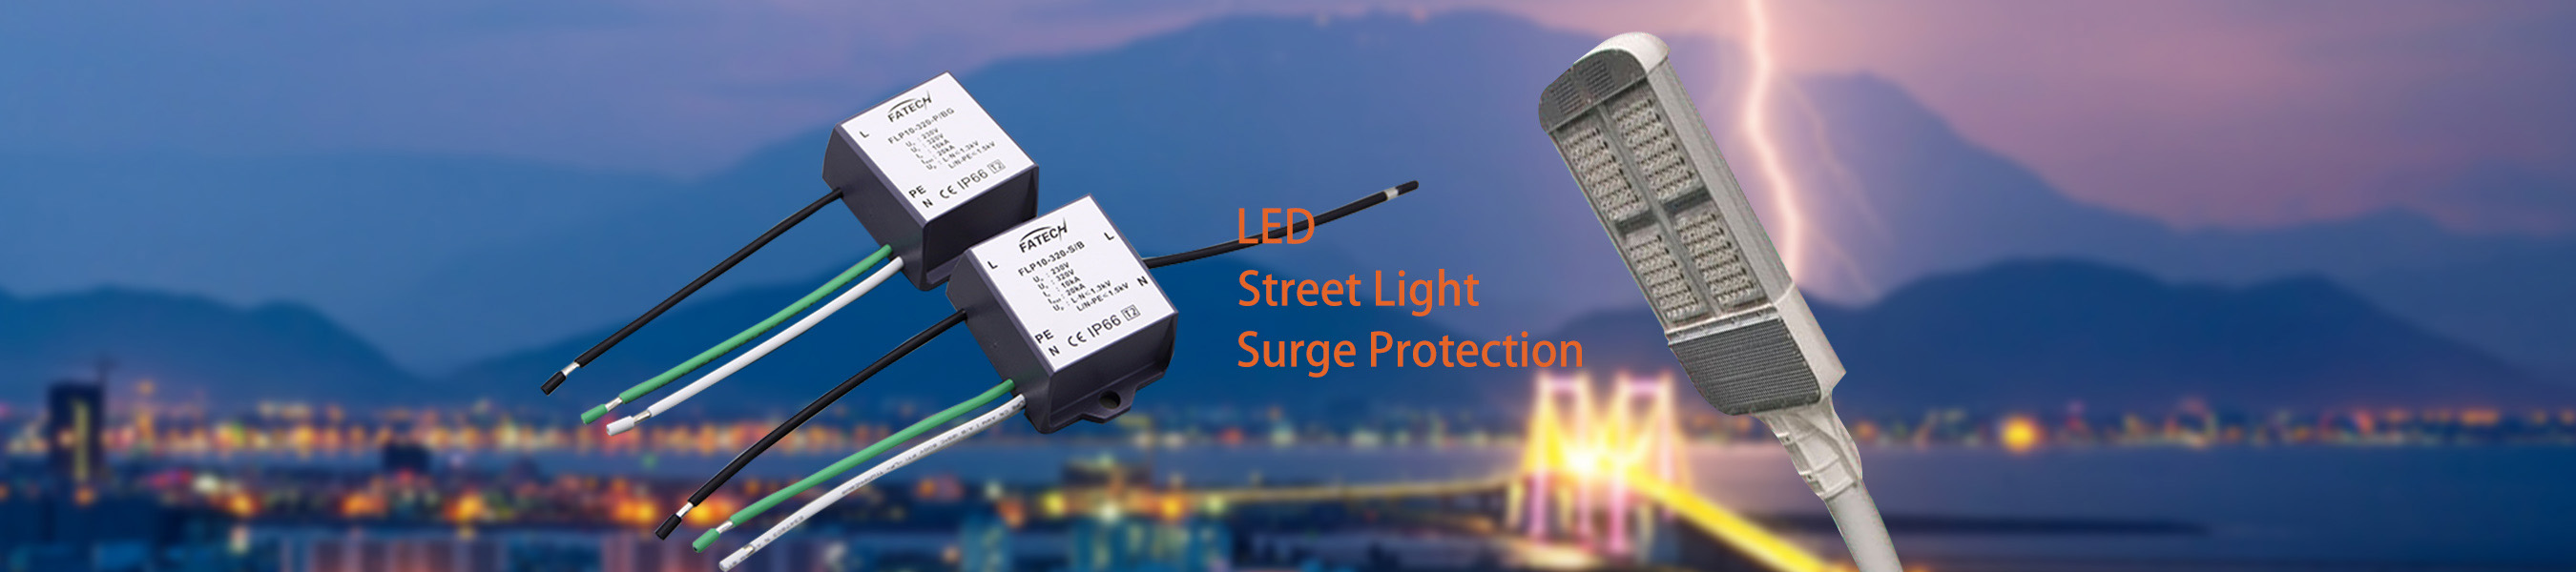 LED Street light surge protection